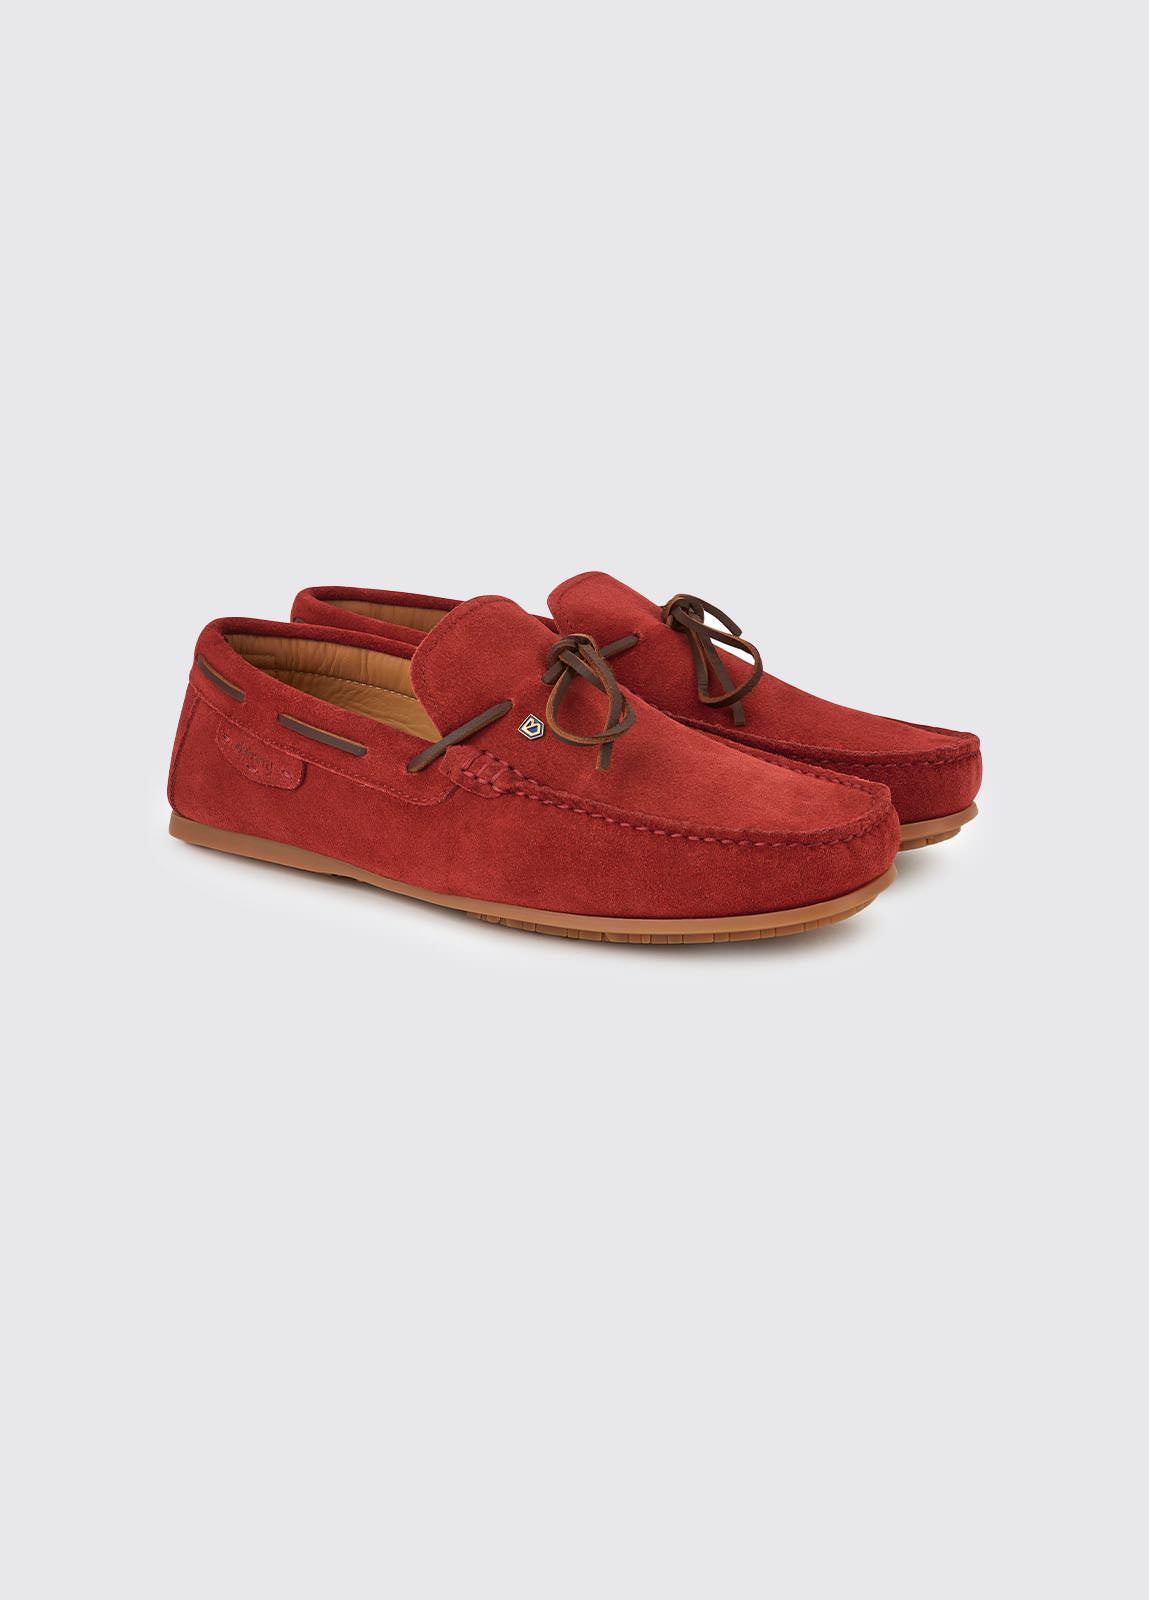 Dubarry Shearwater Deck Shoes - Nantuck Red